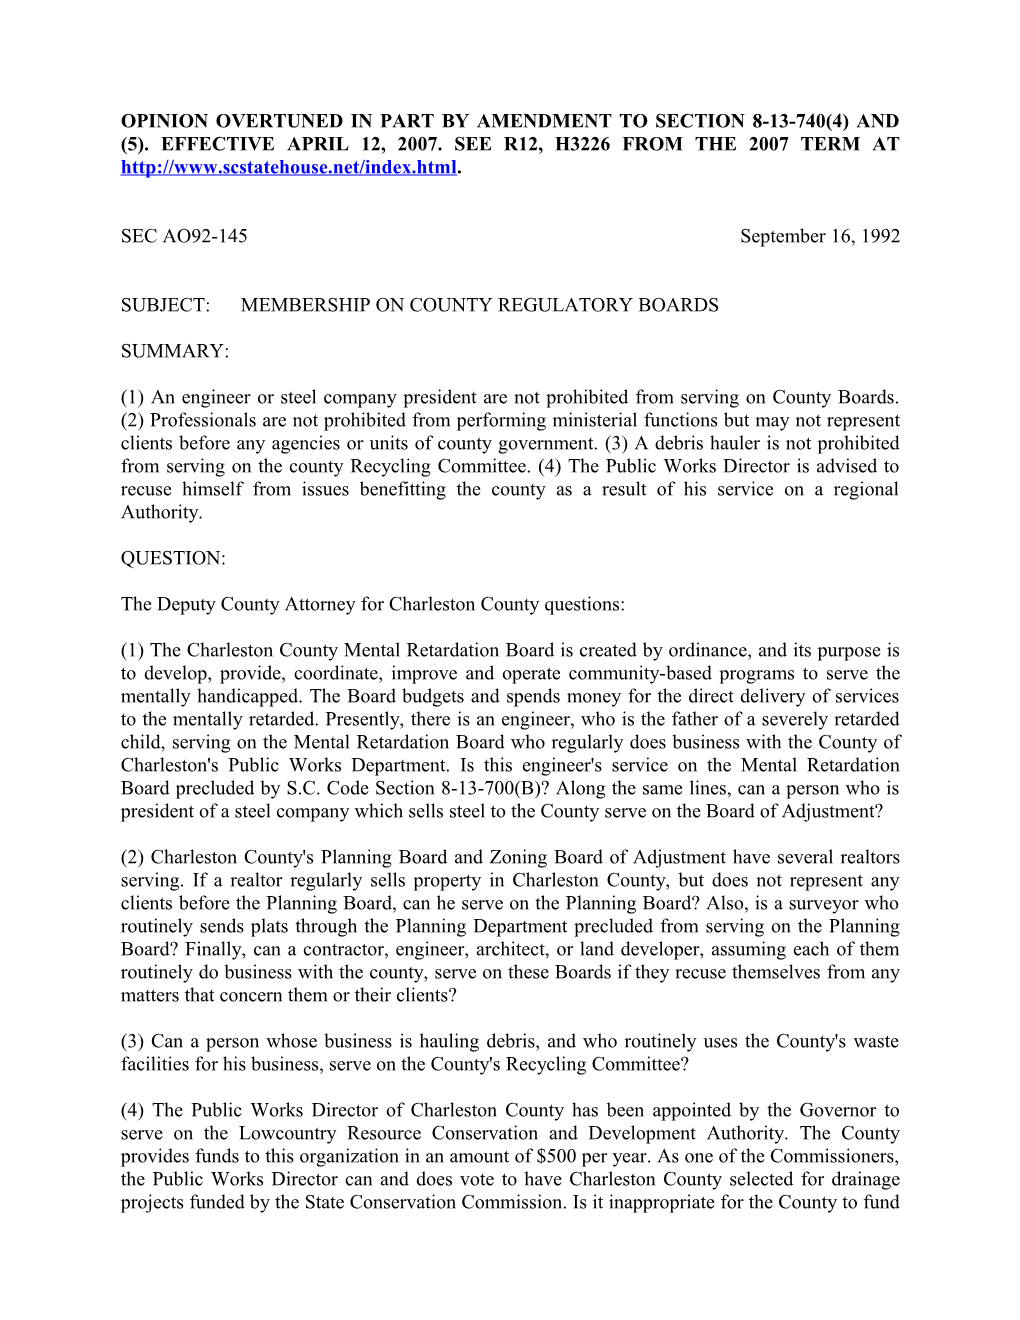 Subject: Membership on County Regulatory Boards